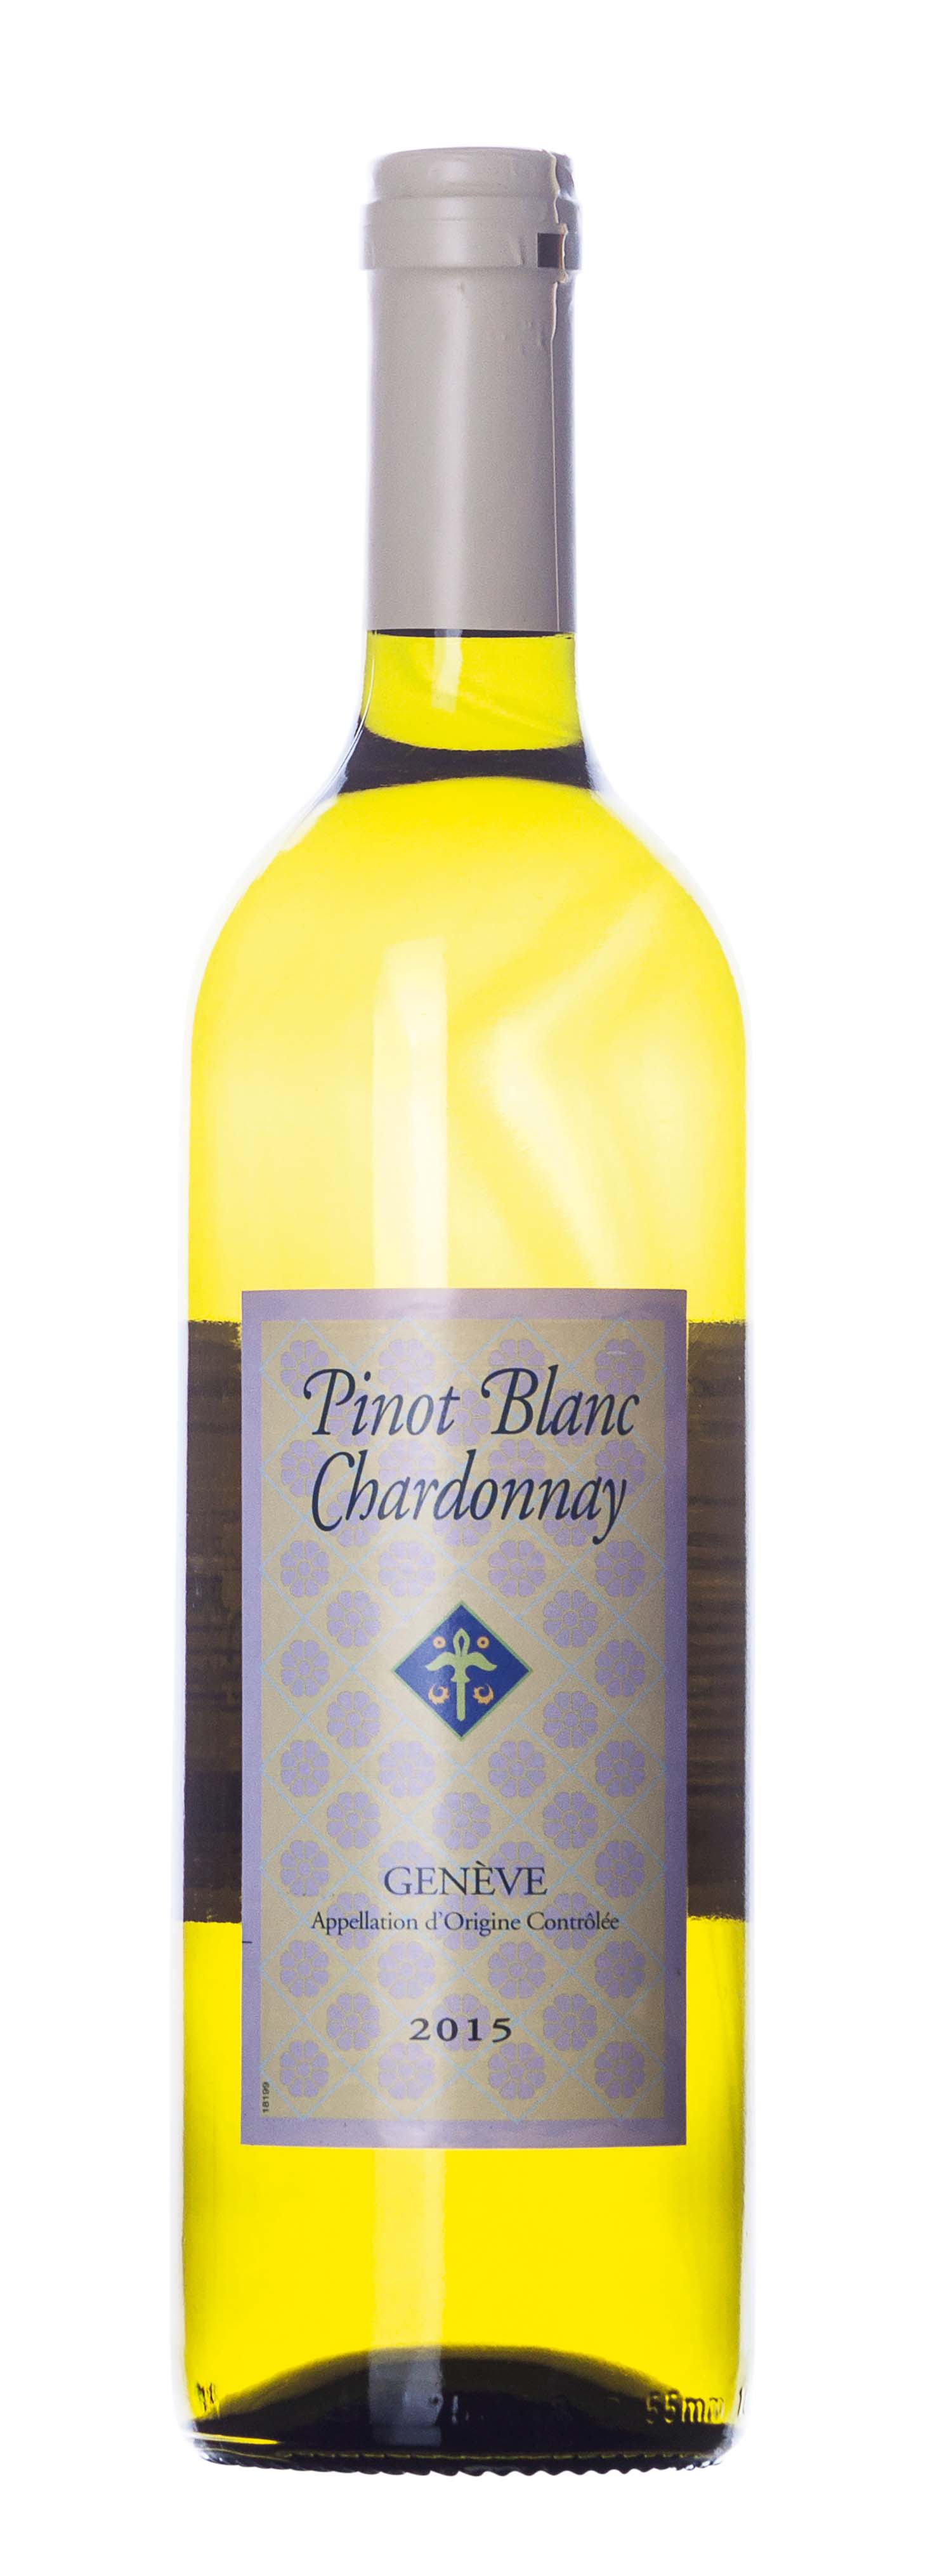 Genève AOC Pinot Blanc Chardonnay 2015